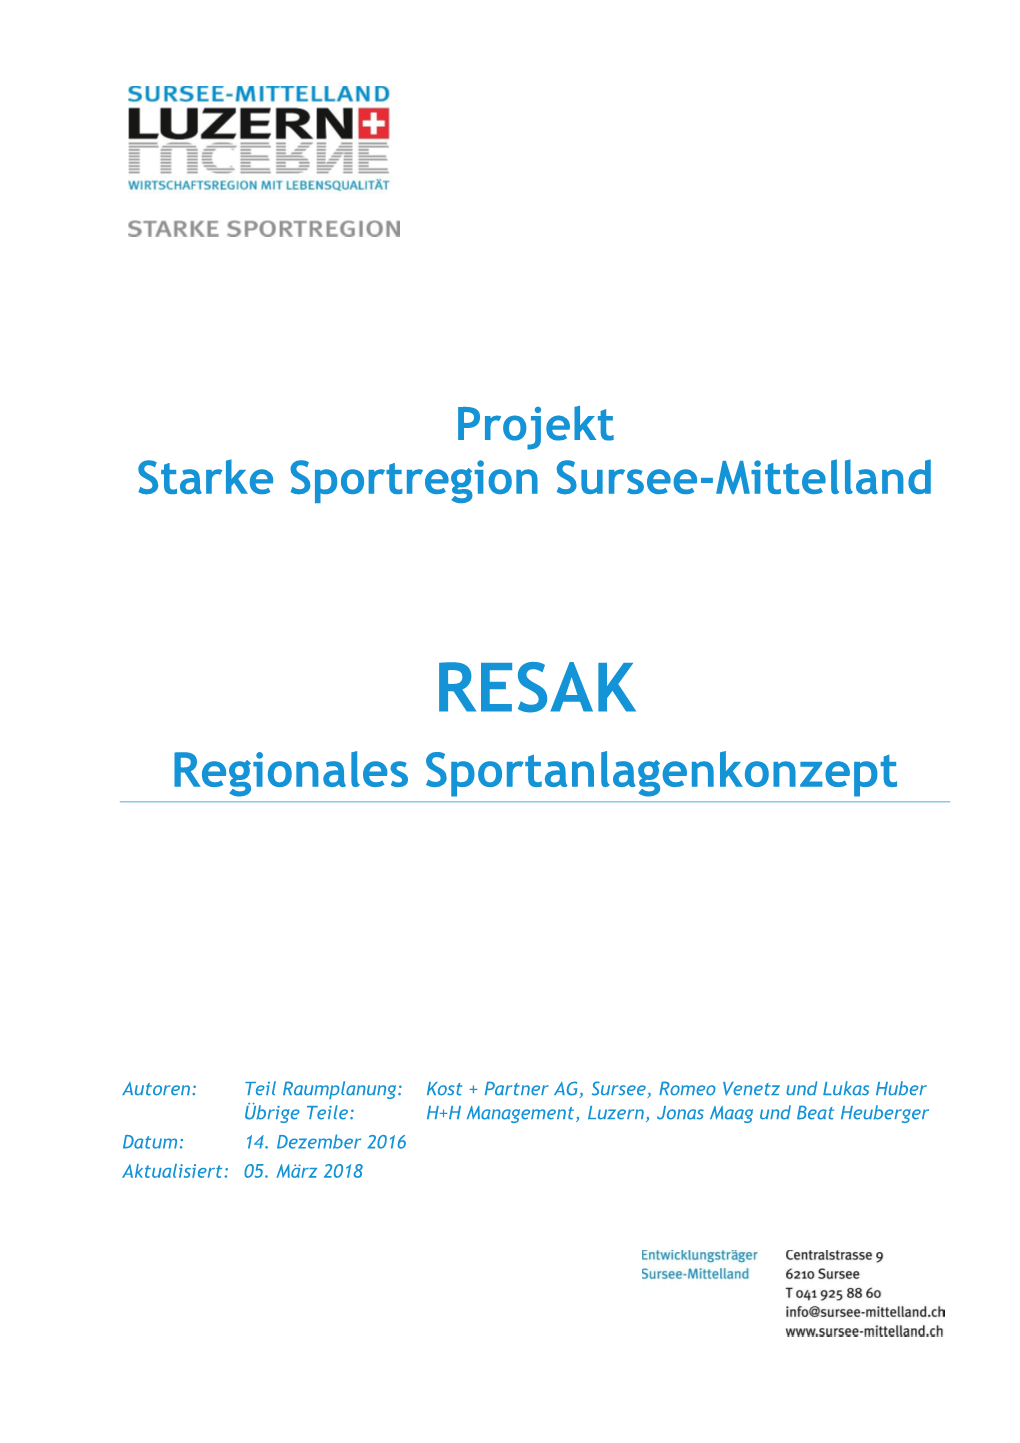 Regionales Sportanlagenkonzept (RESAK)